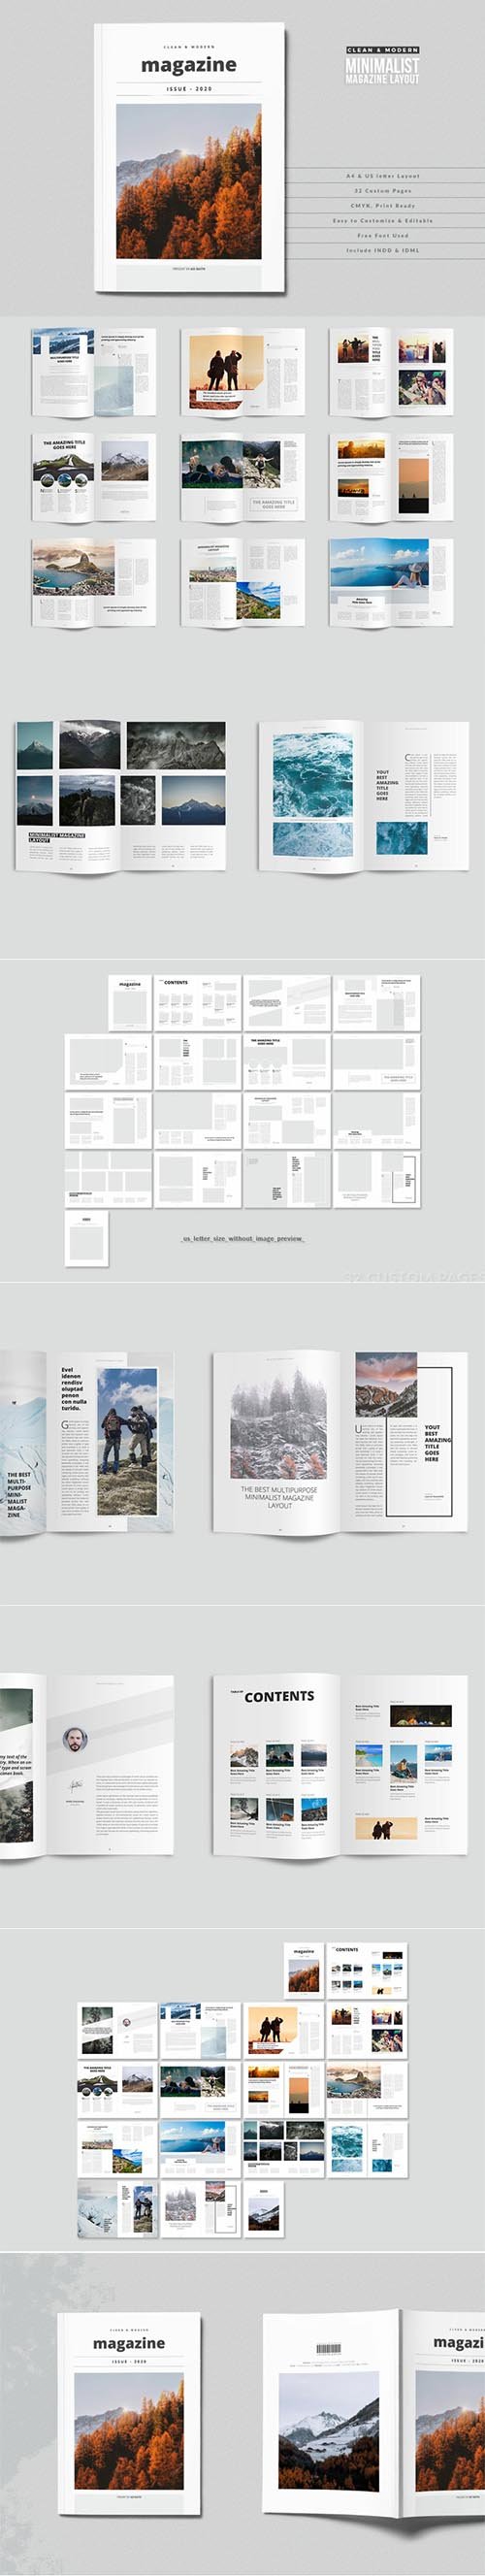 Clean and modern minimalist magazine template